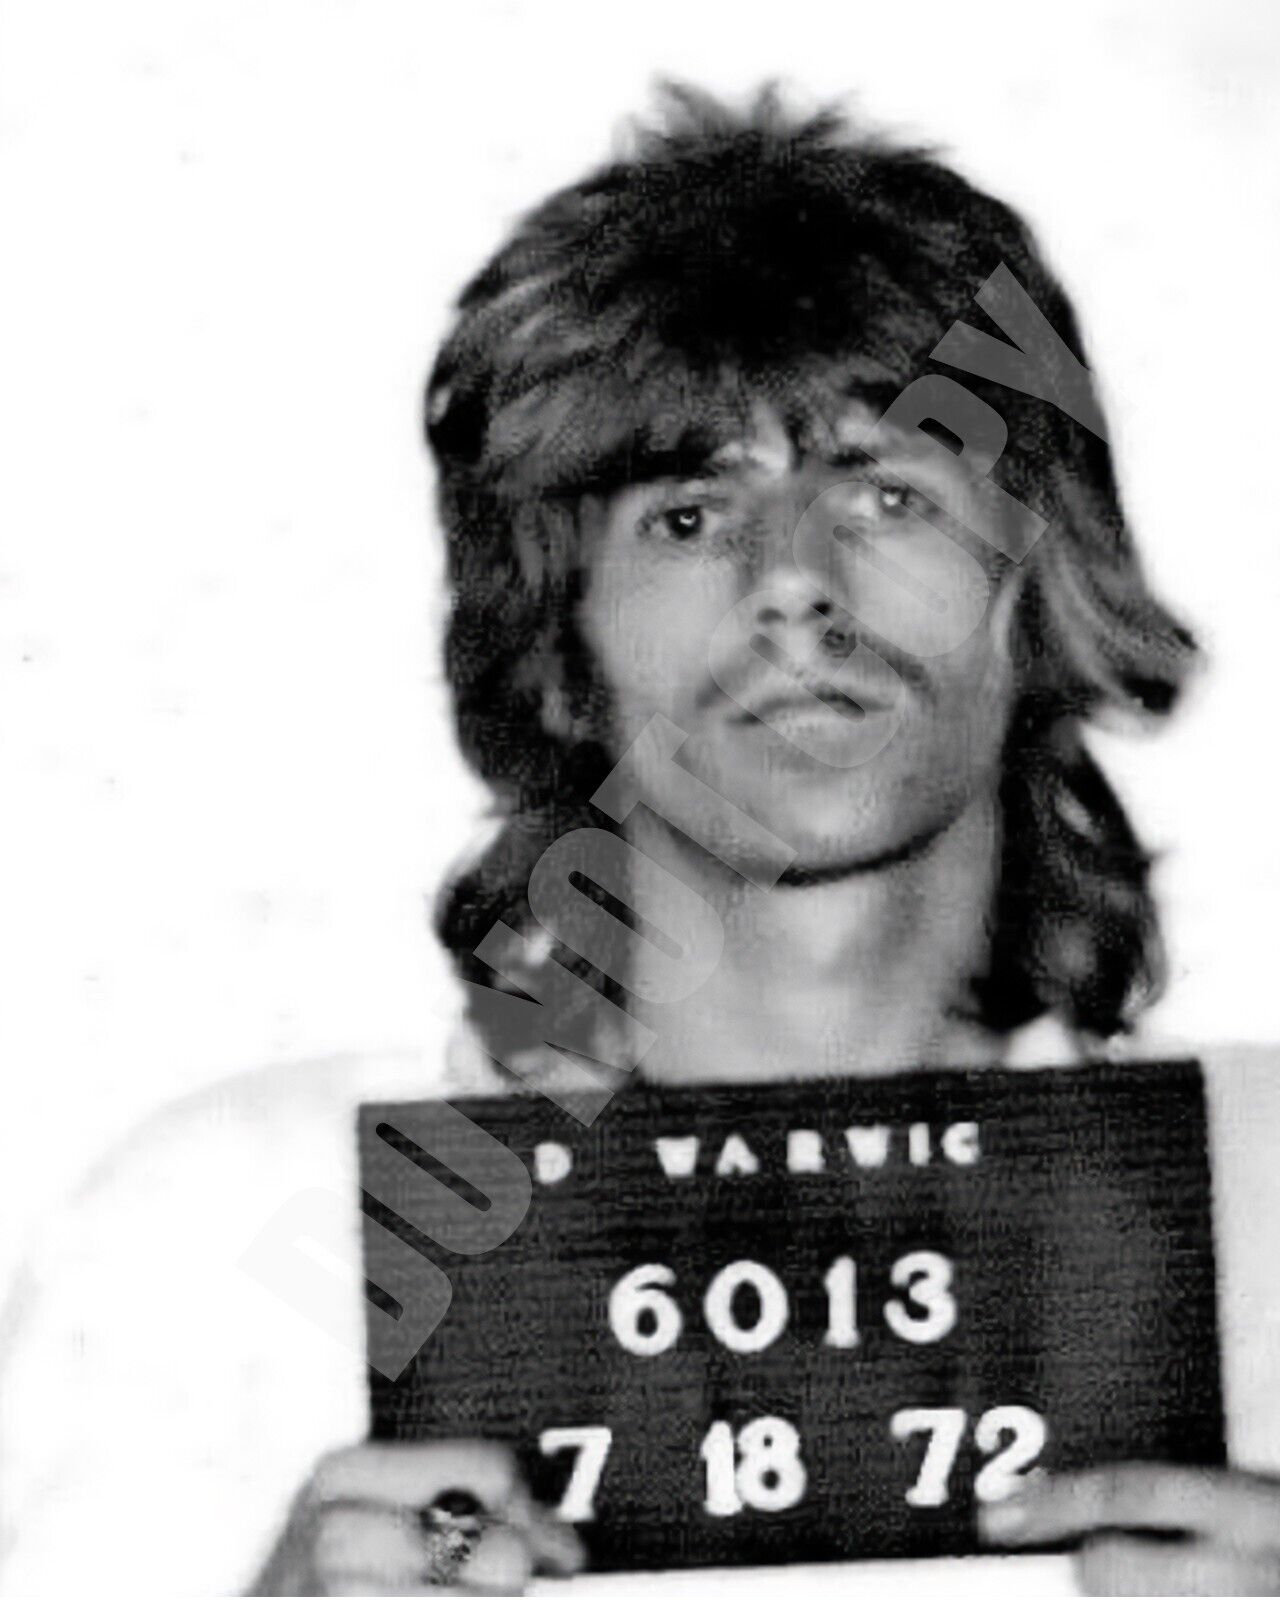 1972 KEITH RICHARDS The Rolling Stones Warwic Police Arrest Mug Shot 8x10 Photo